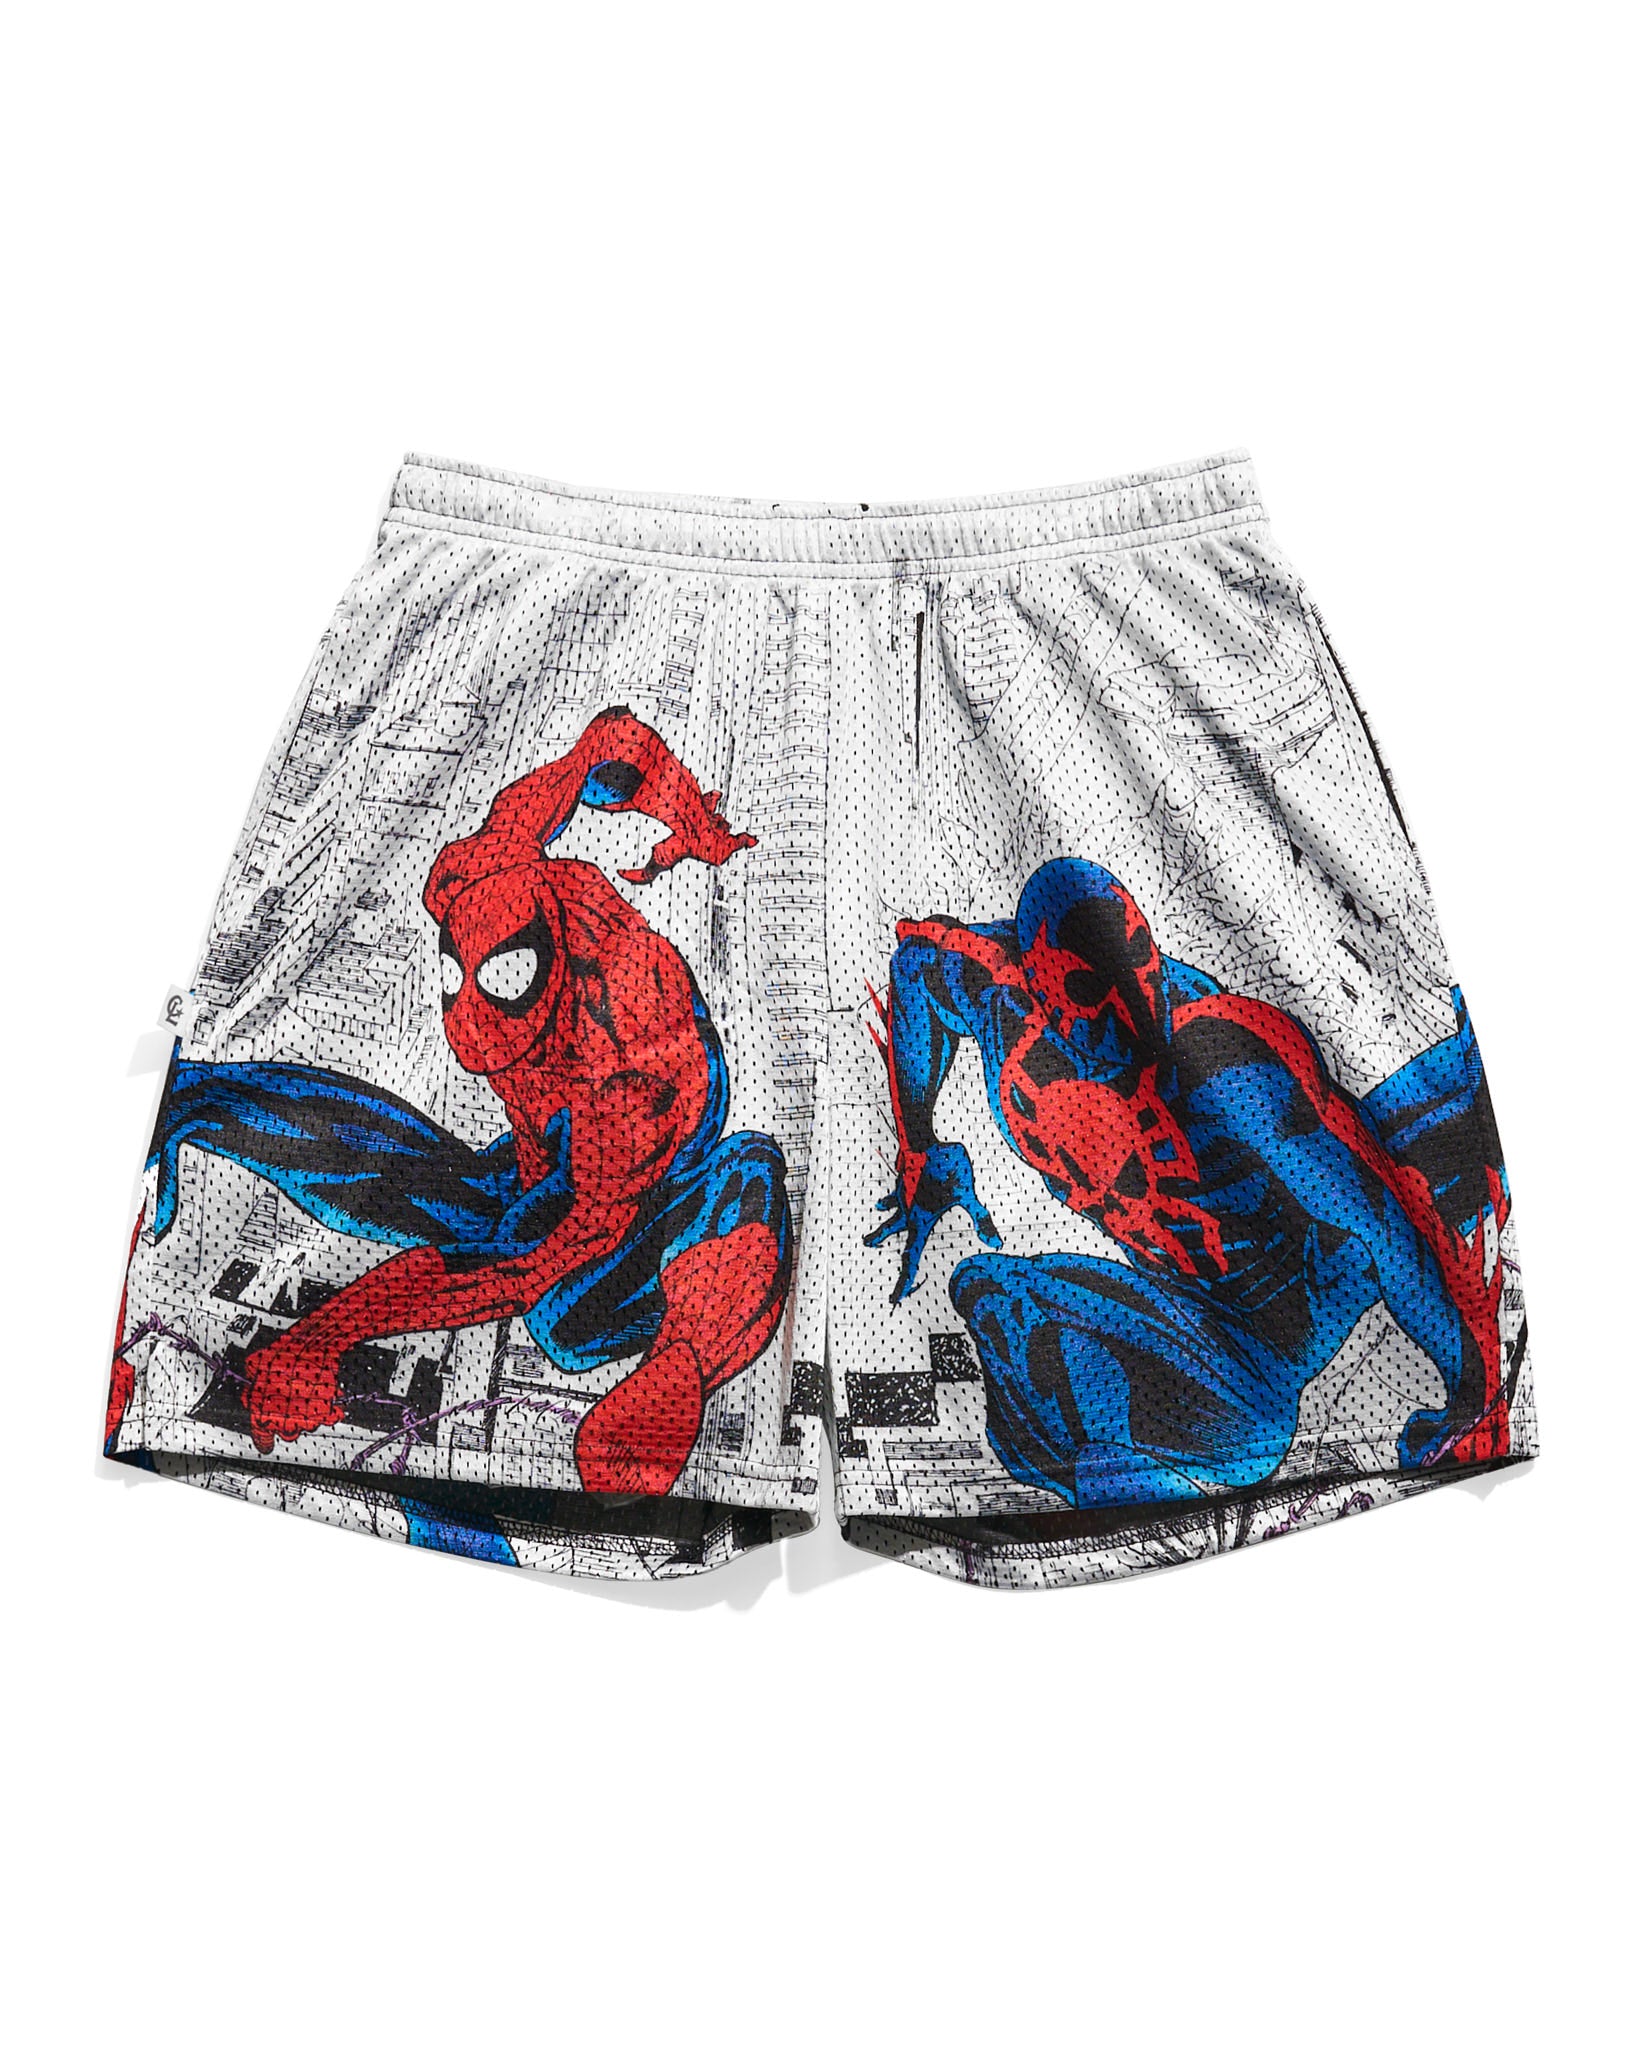 Spider-Man 2099 Poster Retro Shorts